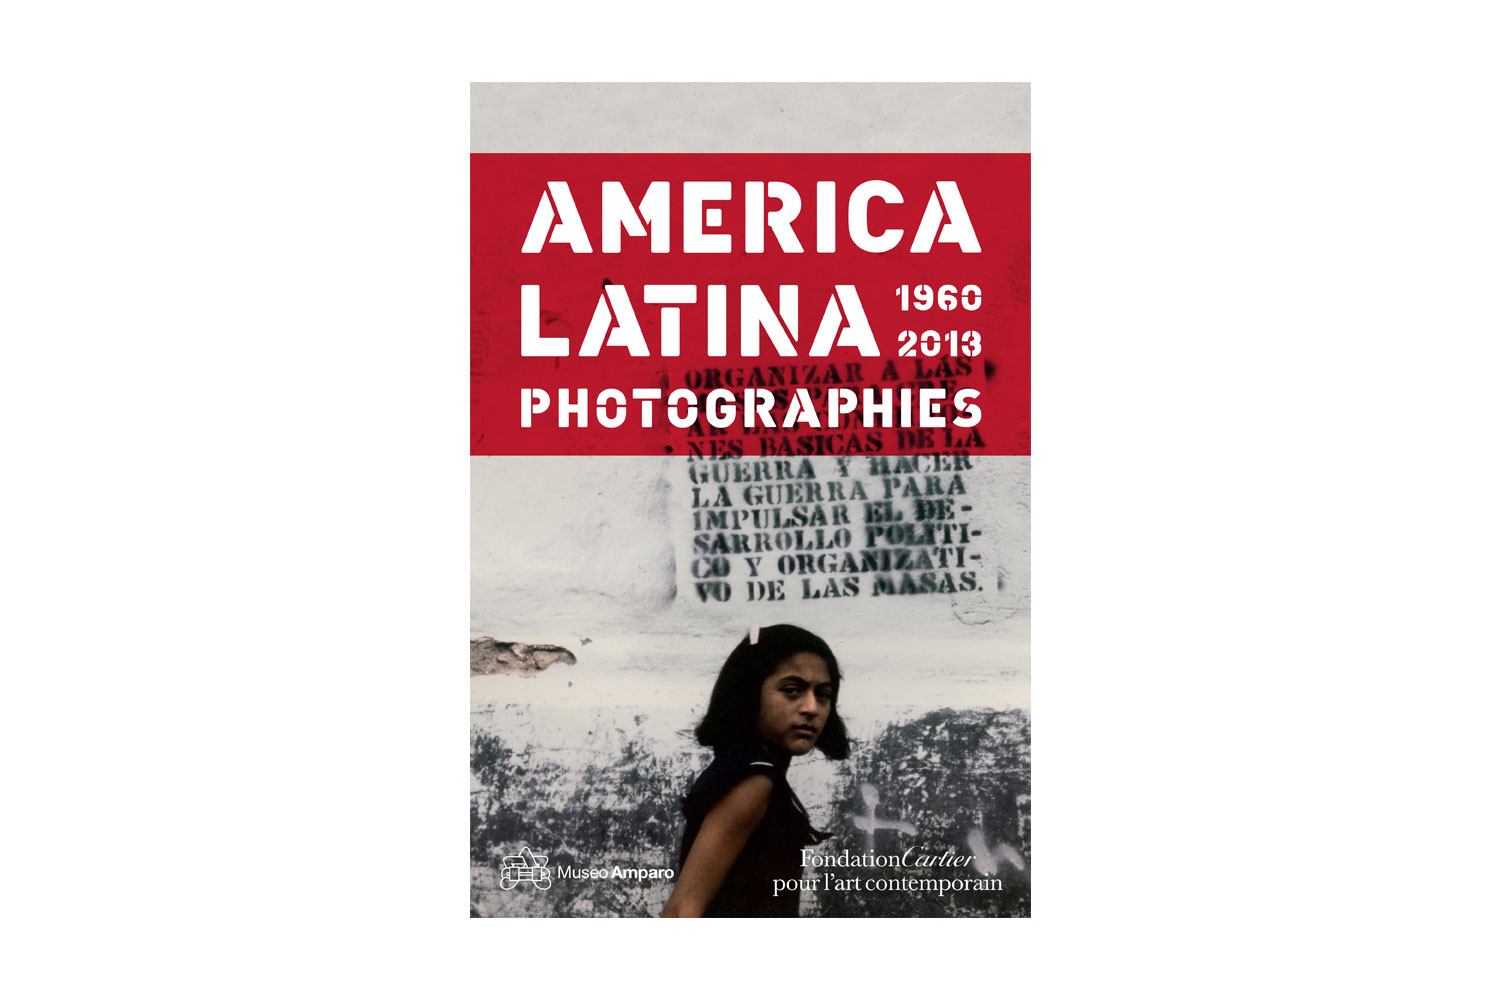 America Latina 1960-2013